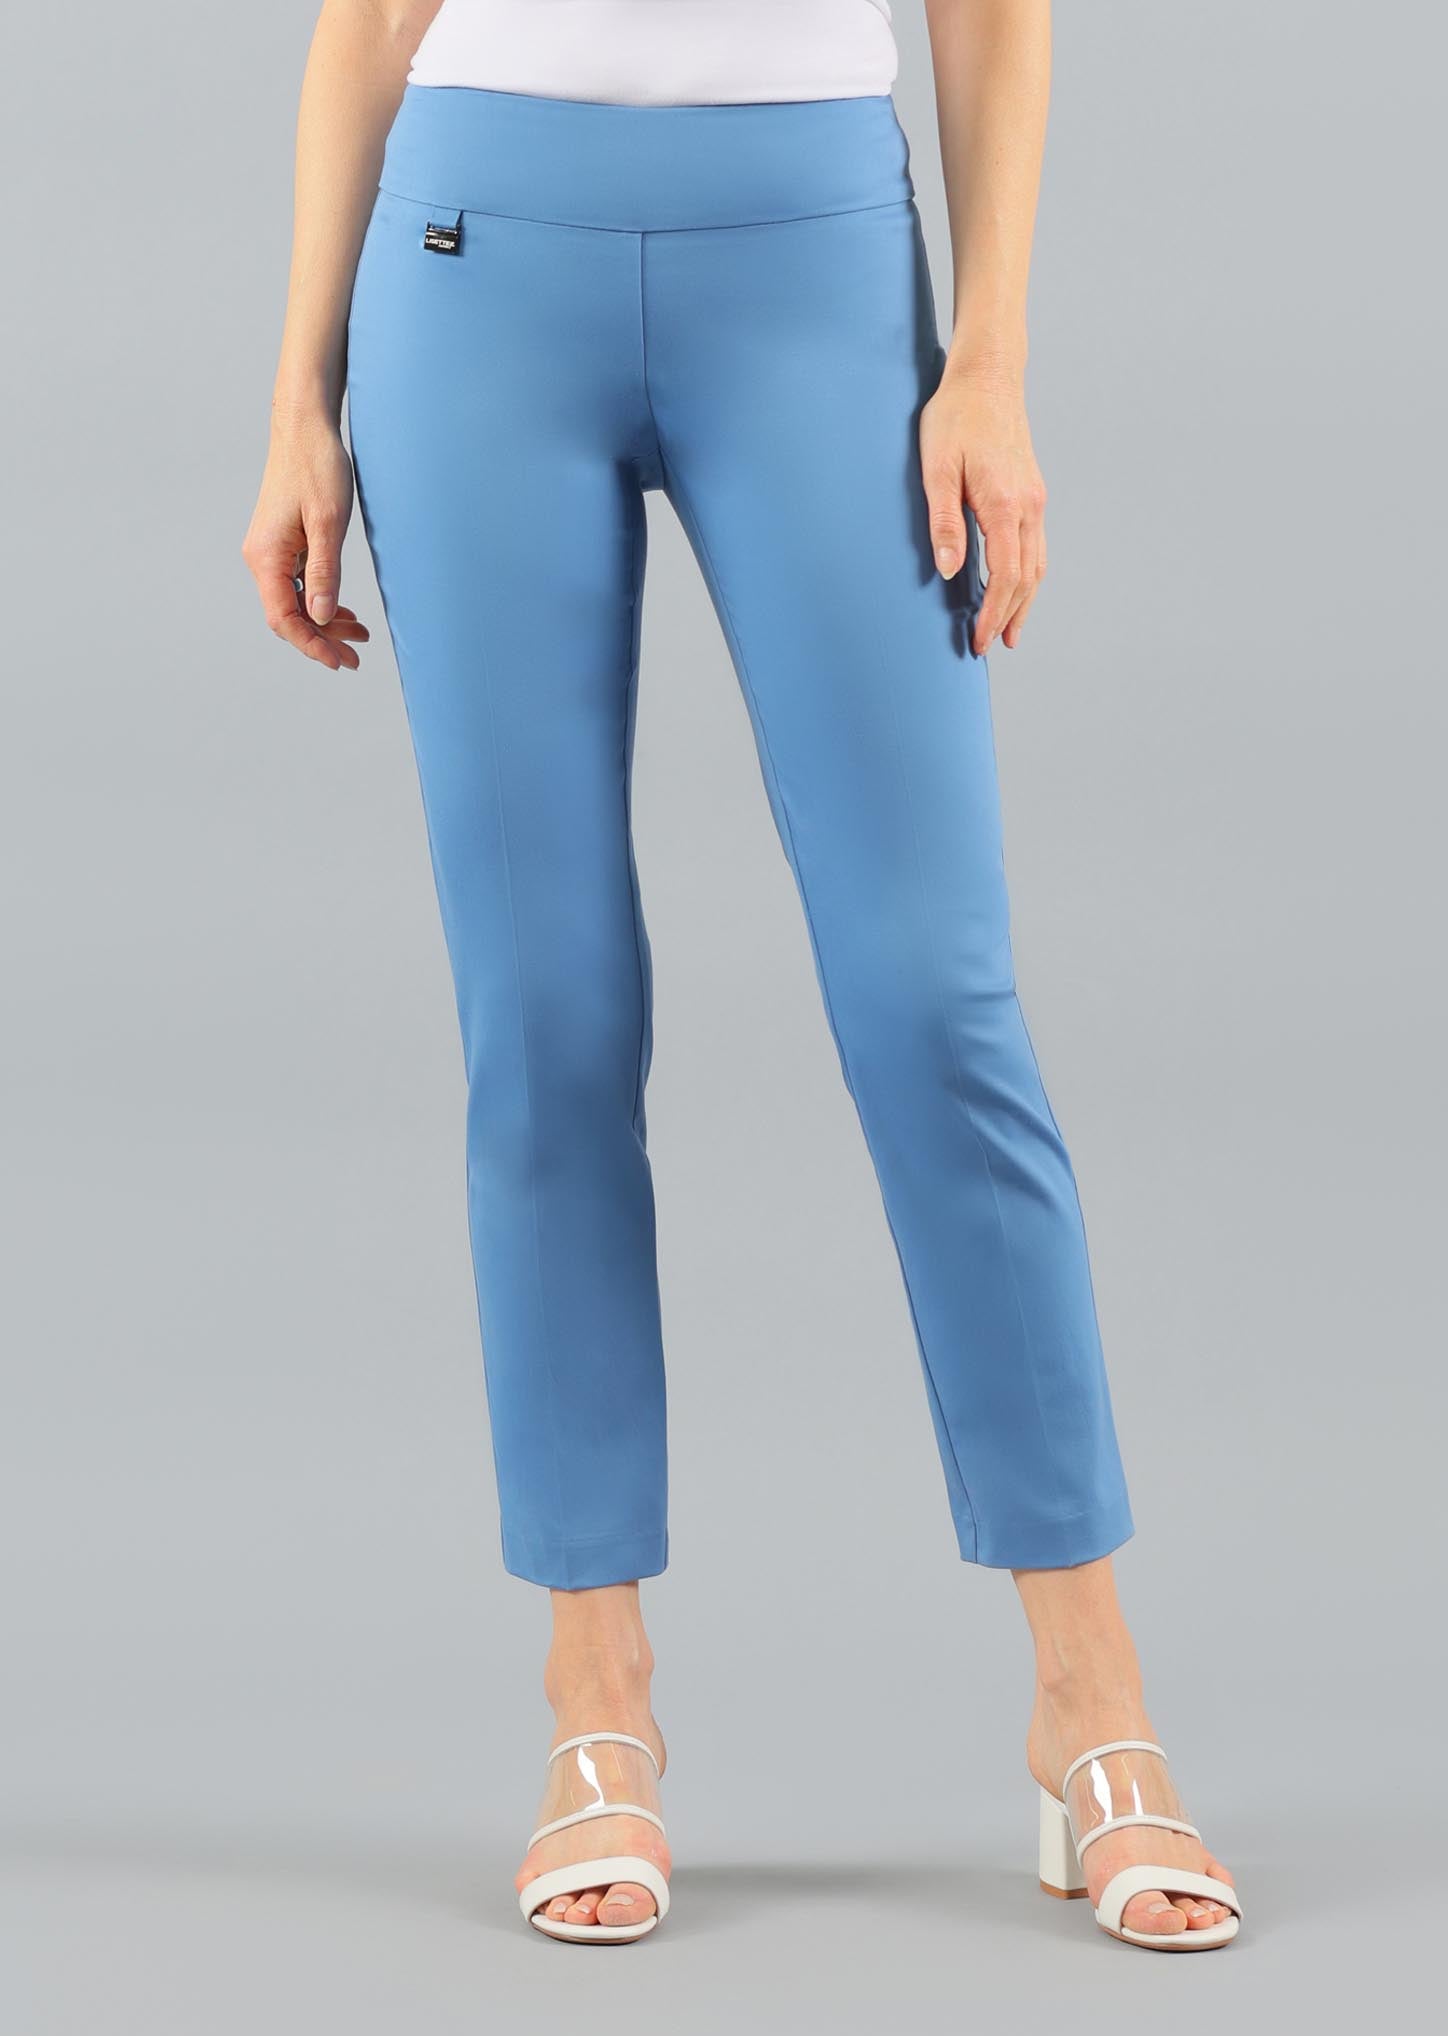 Women's Juliet Ponte Trim Detail Ankle Pants in Dark Blue size 4